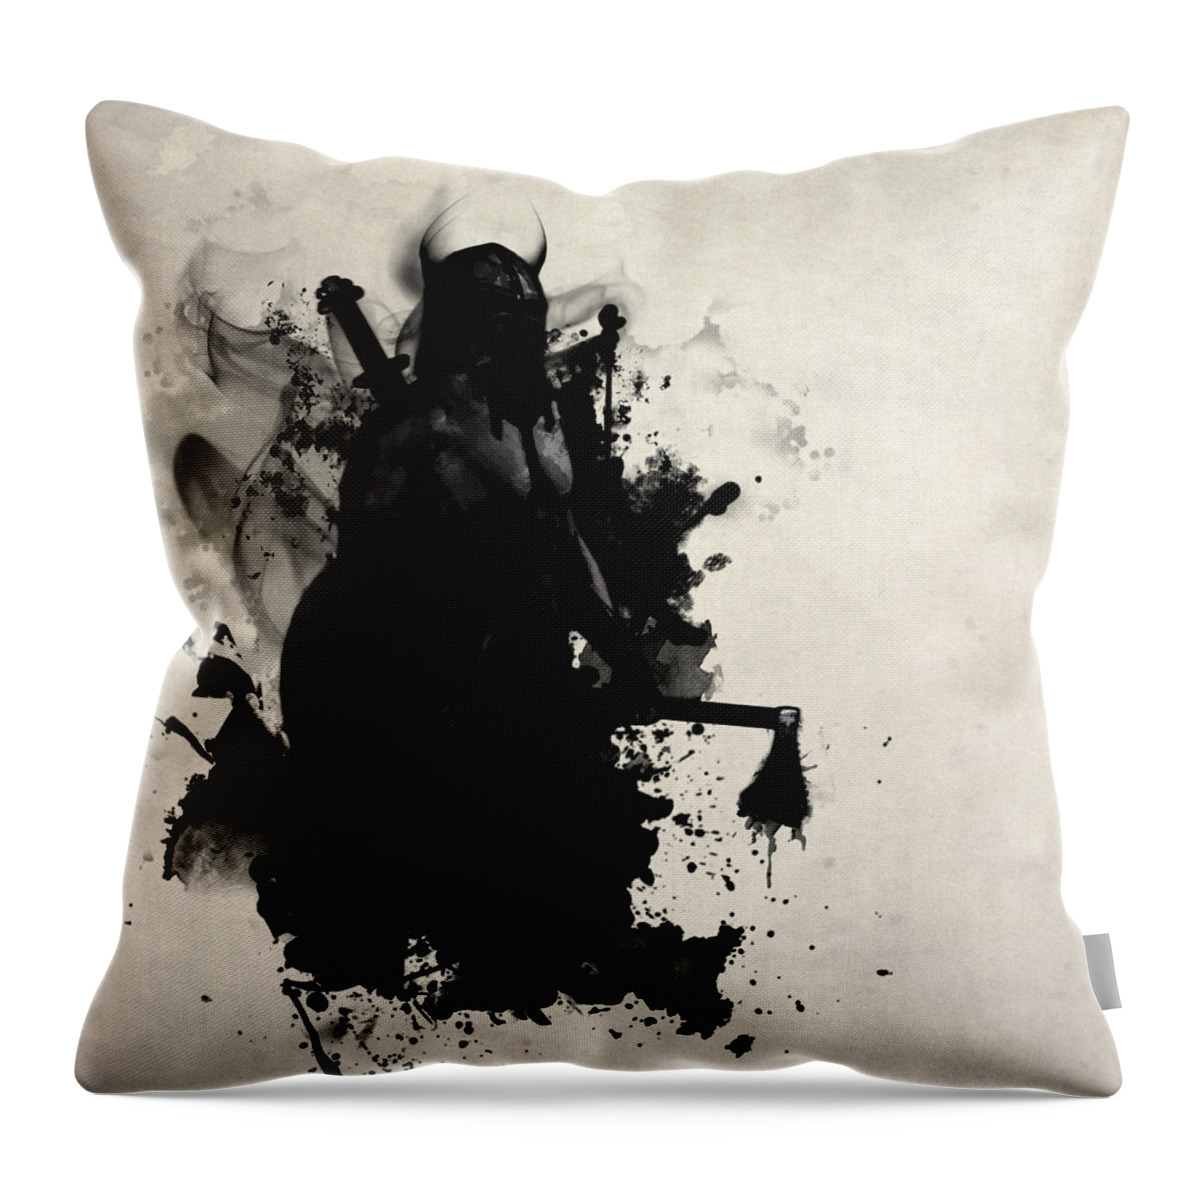 Viking Throw Pillow featuring the digital art Viking by Nicklas Gustafsson